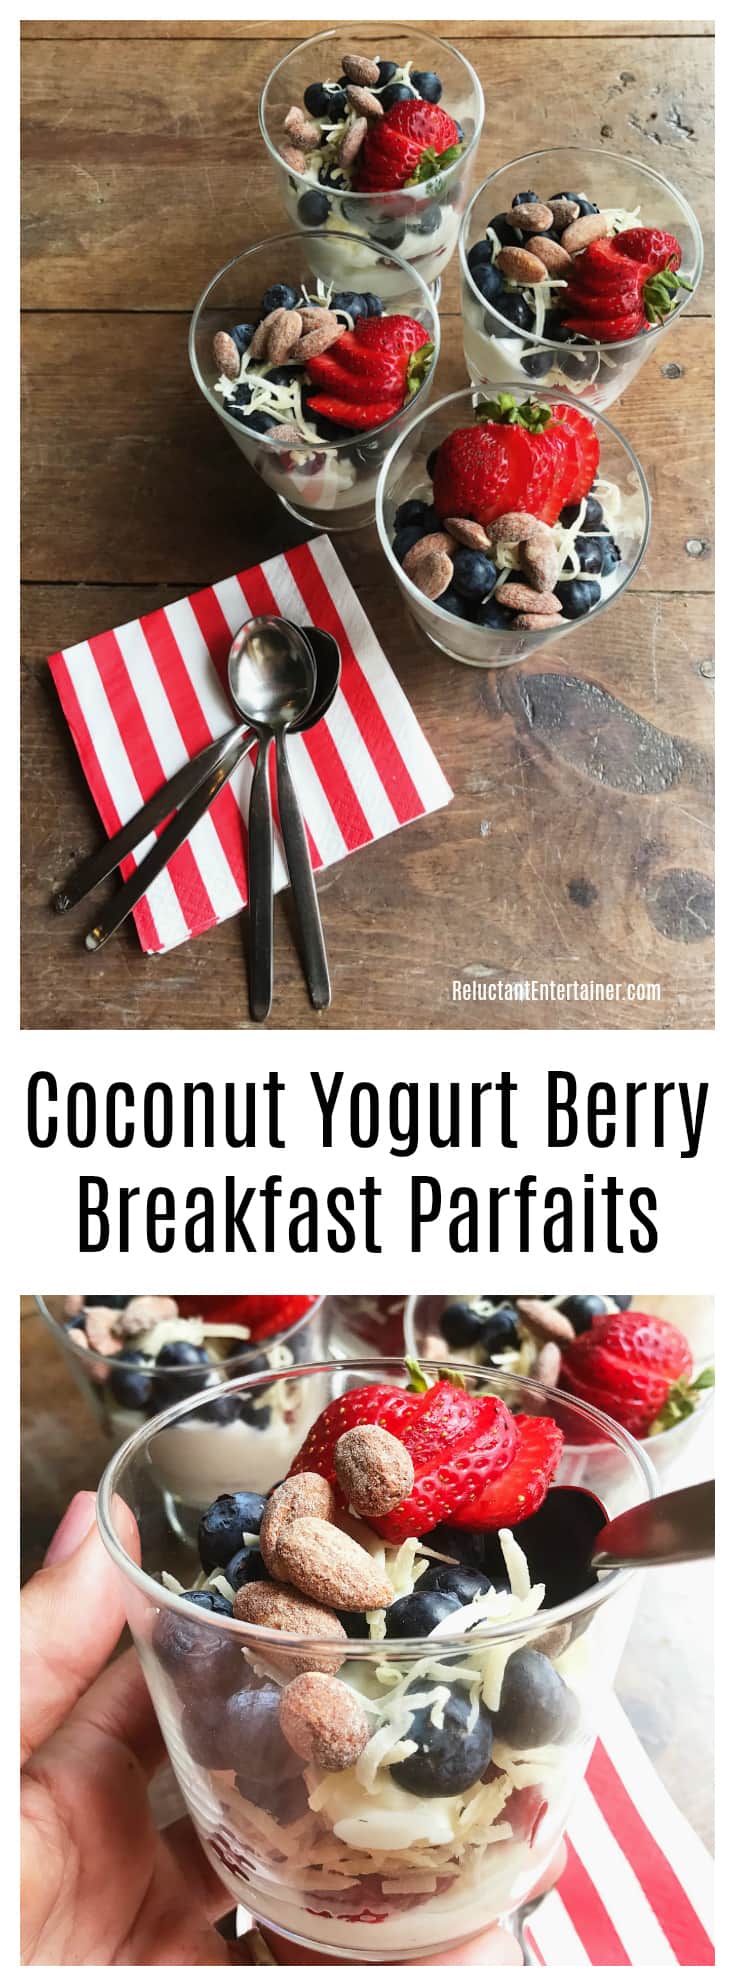 Coconut Yogurt Berry Breakfast Parfaits